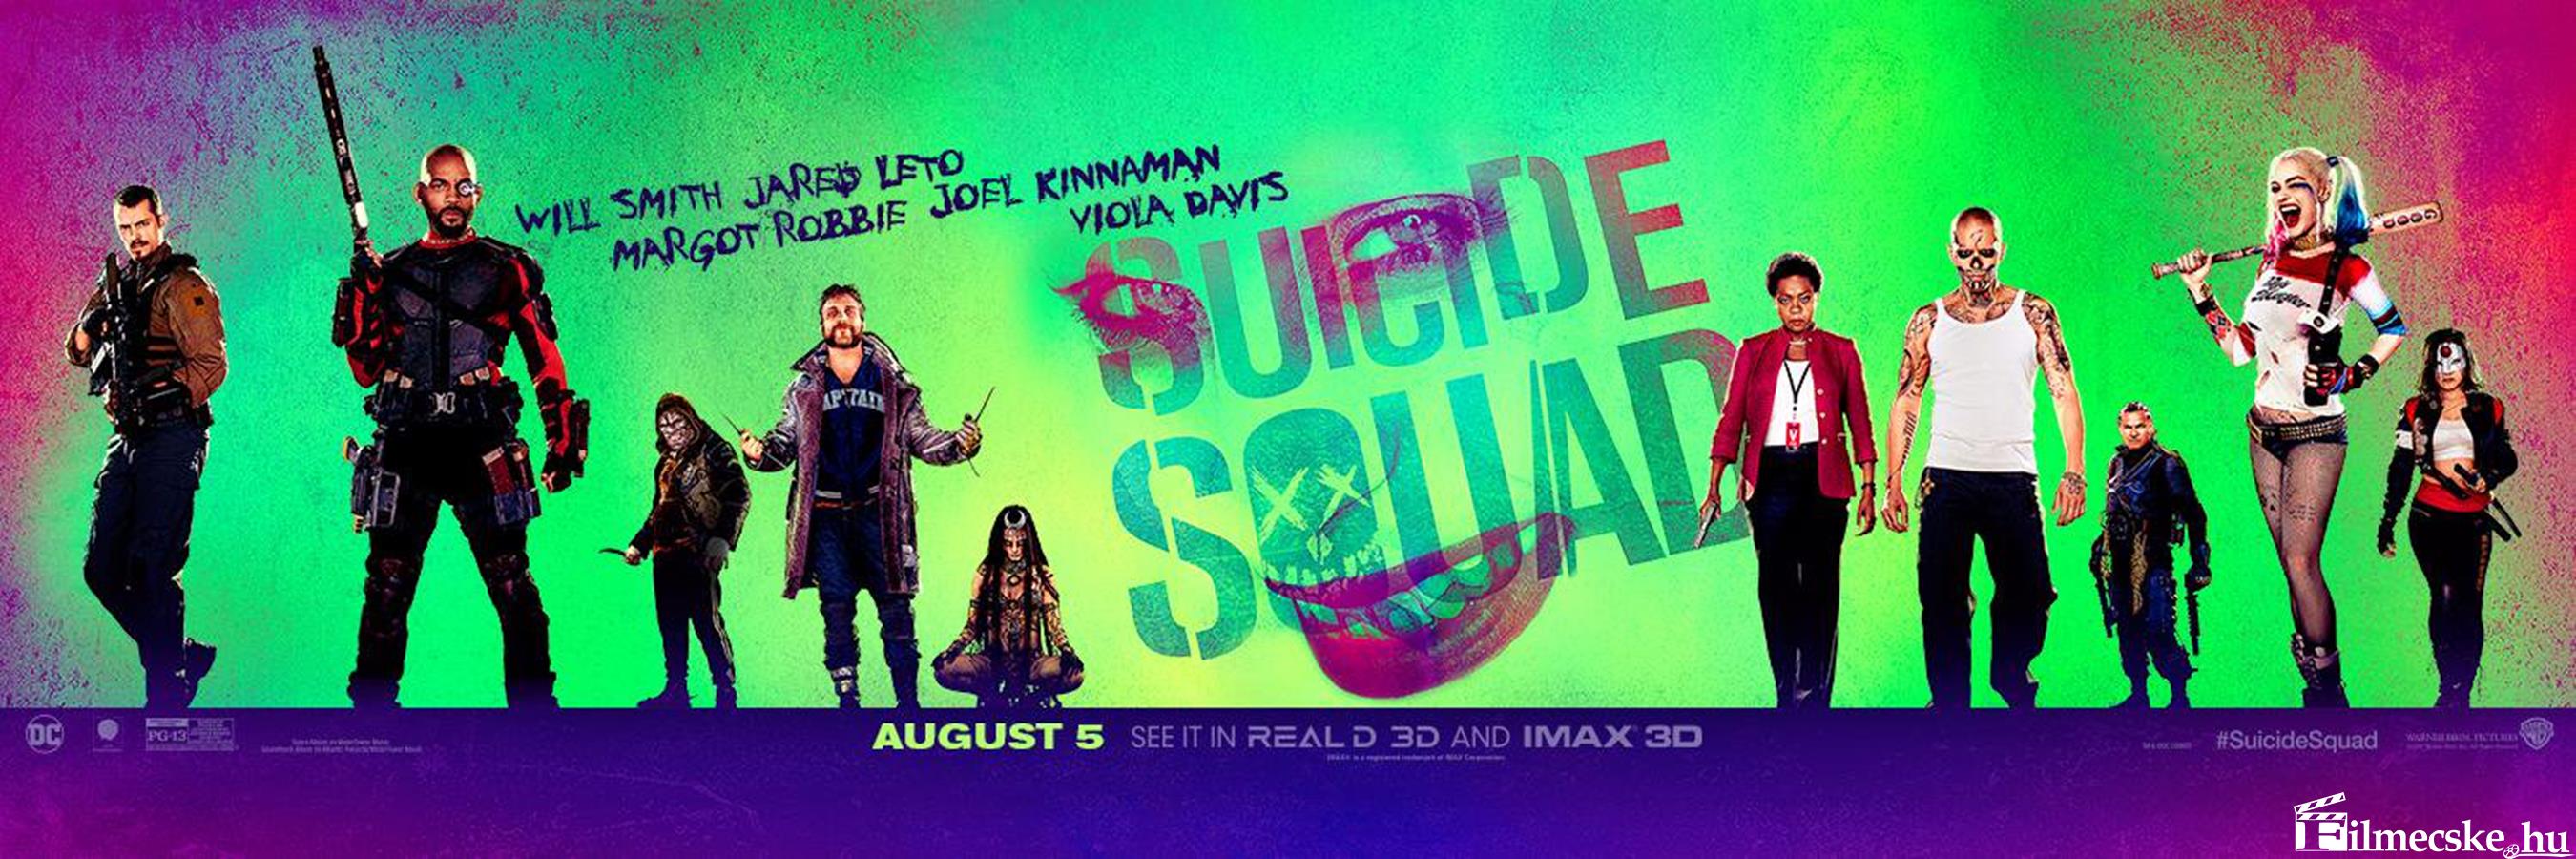 Suicide Squad banner Filmecske.hu